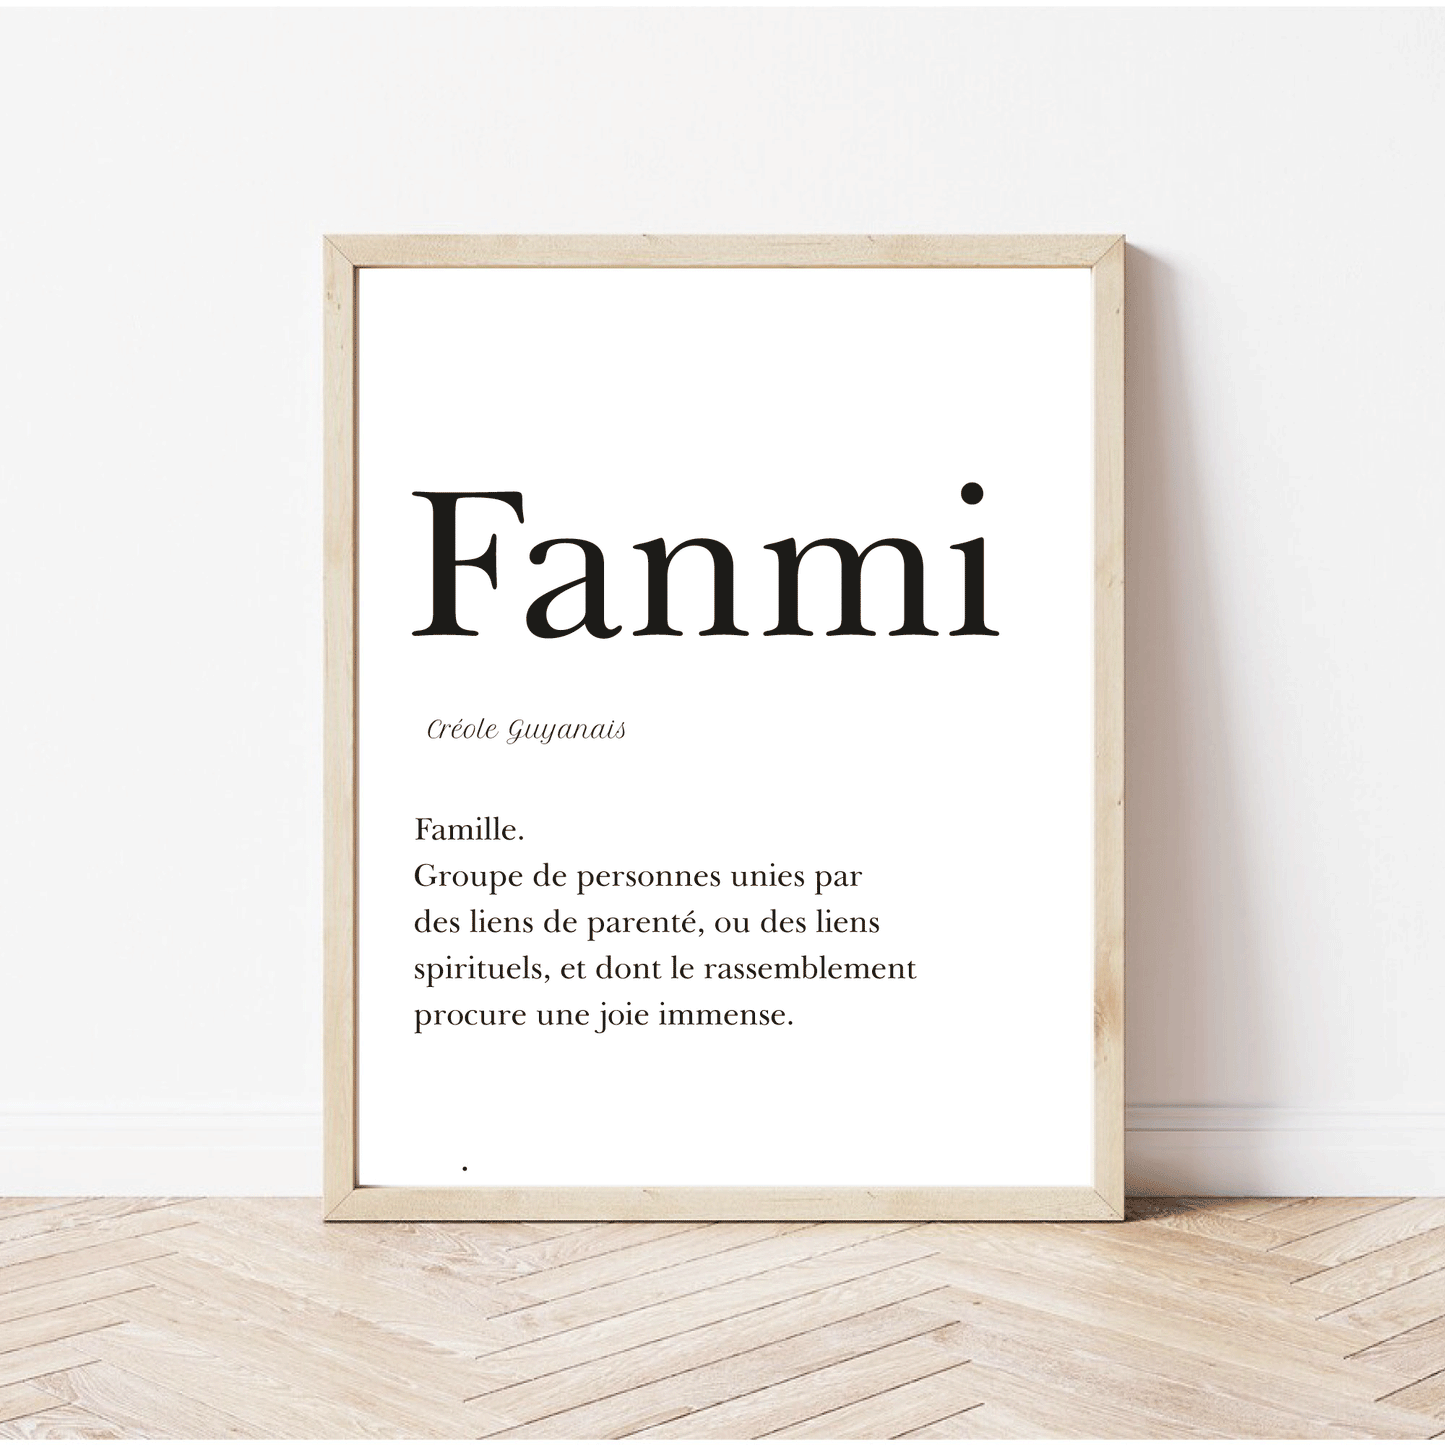 Family in Guyanese Creole - "Fanmi" - 